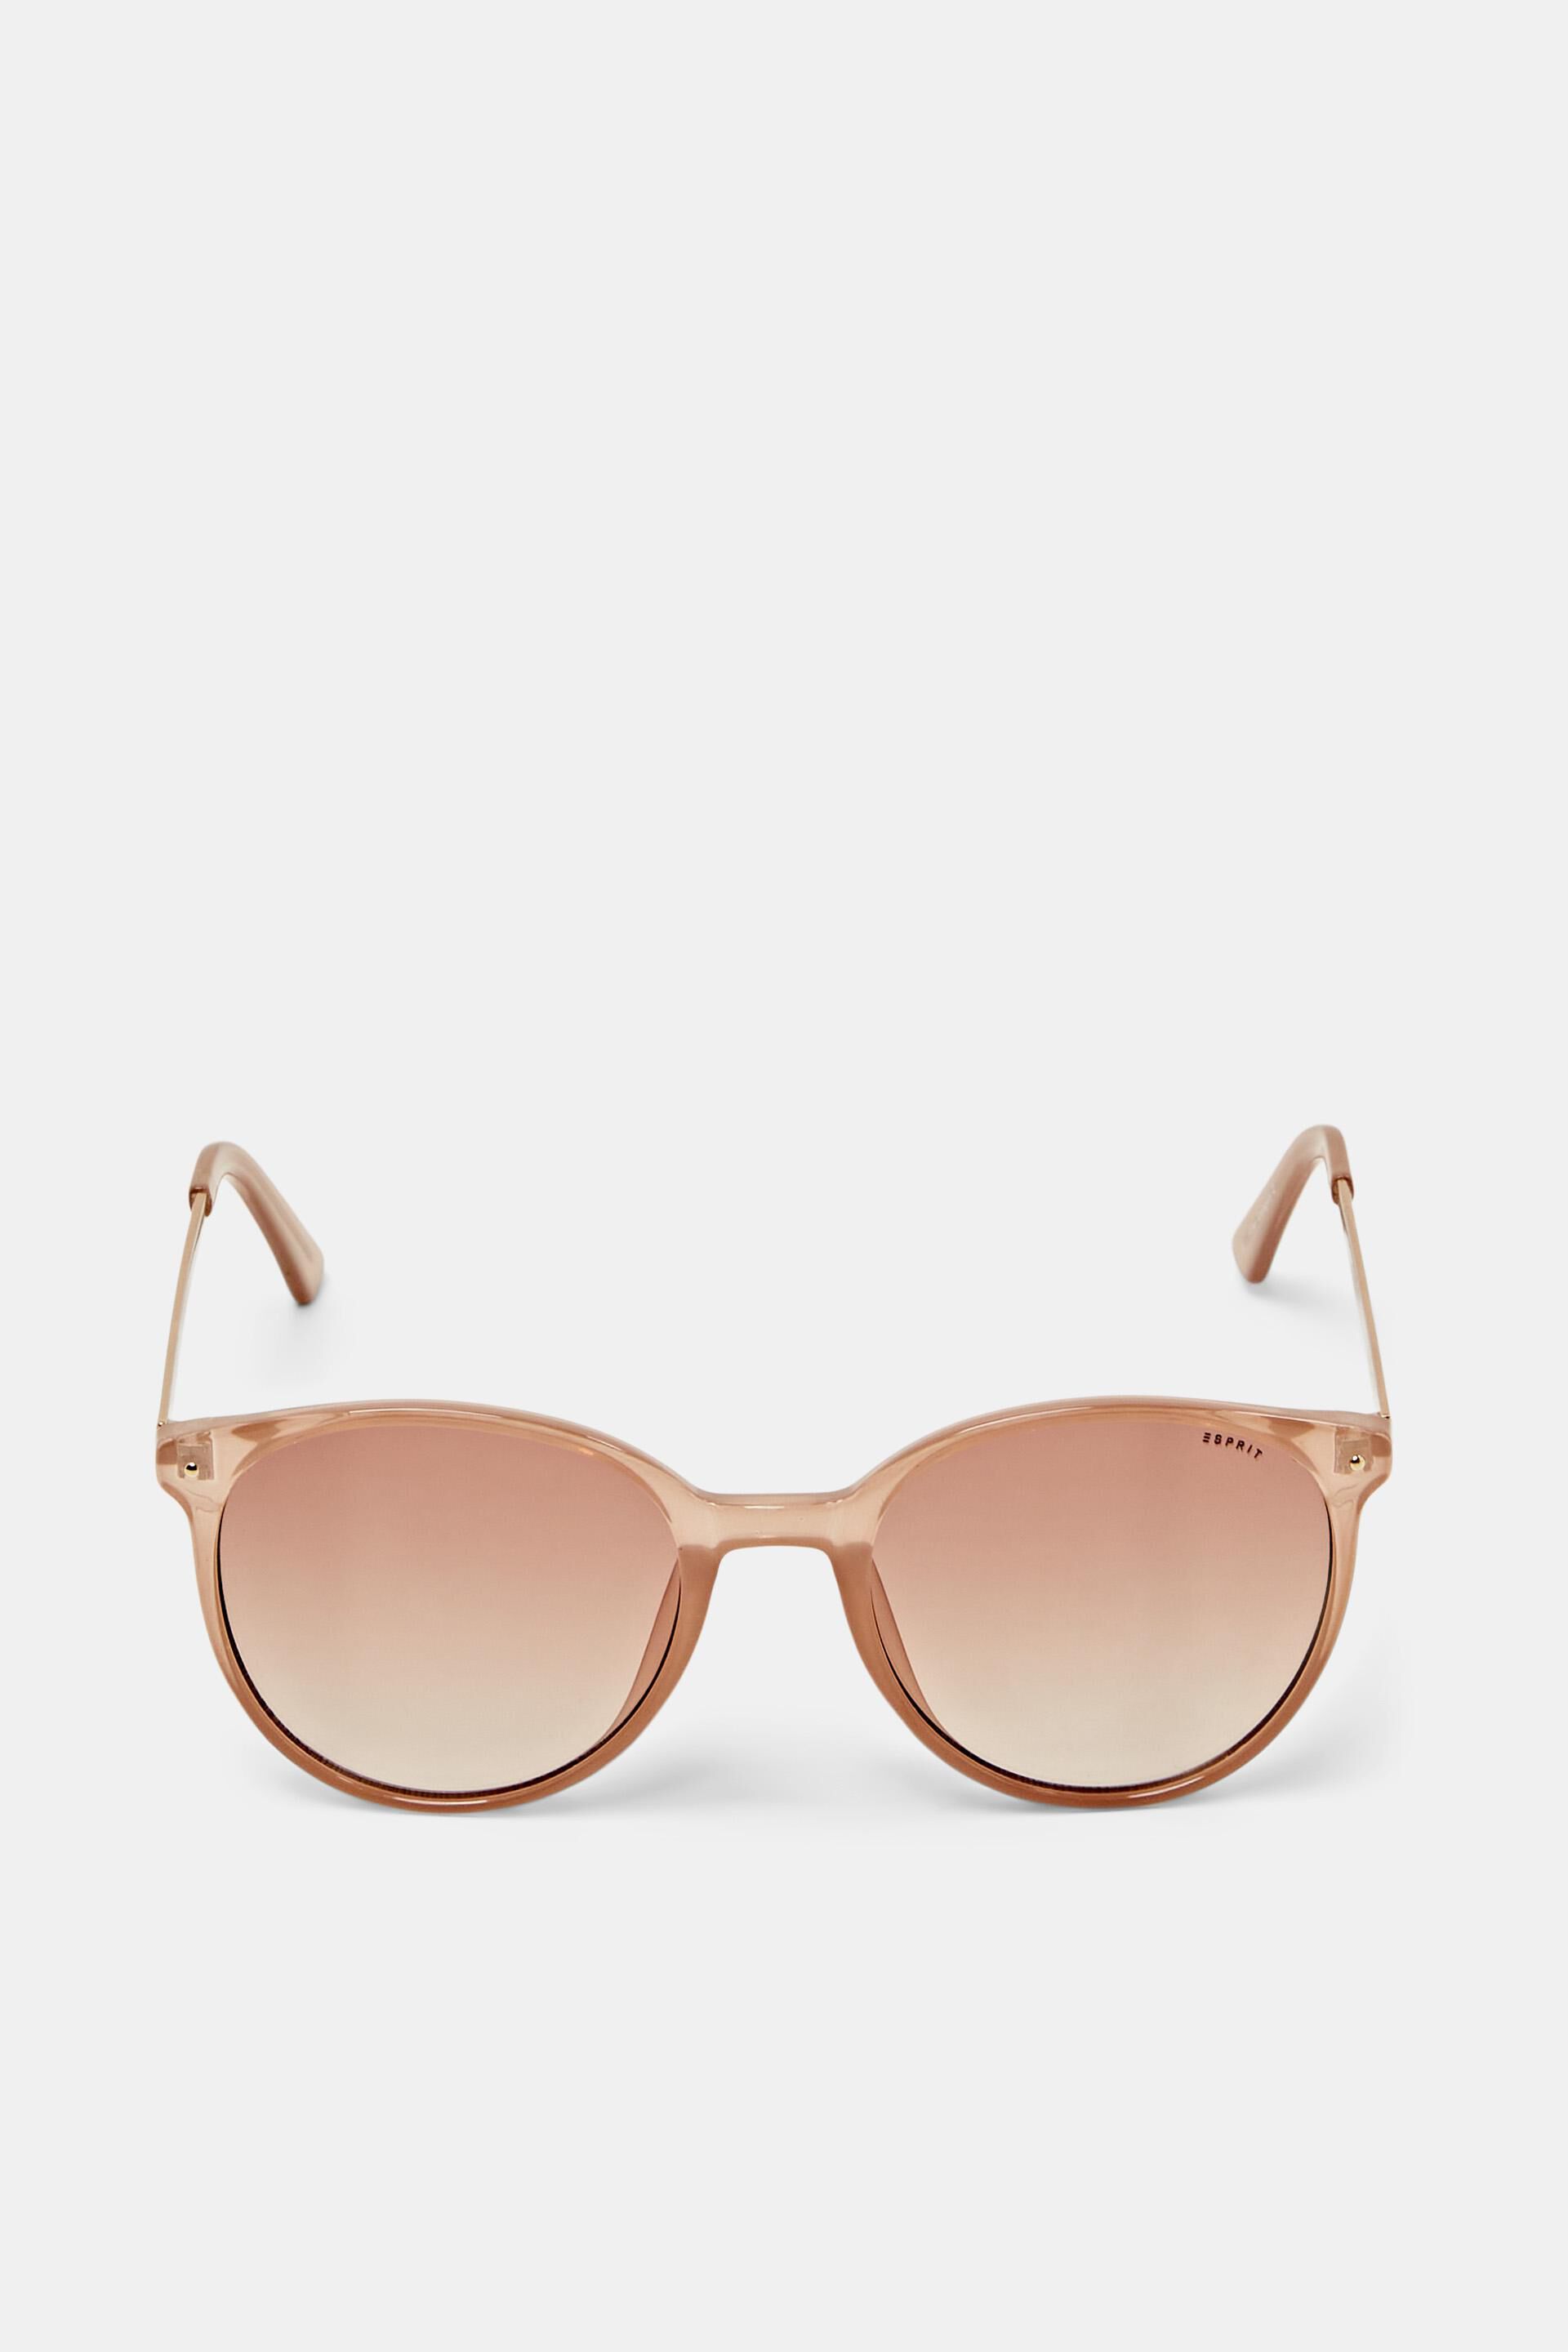 Esprit Online Store Round framed sunglasses